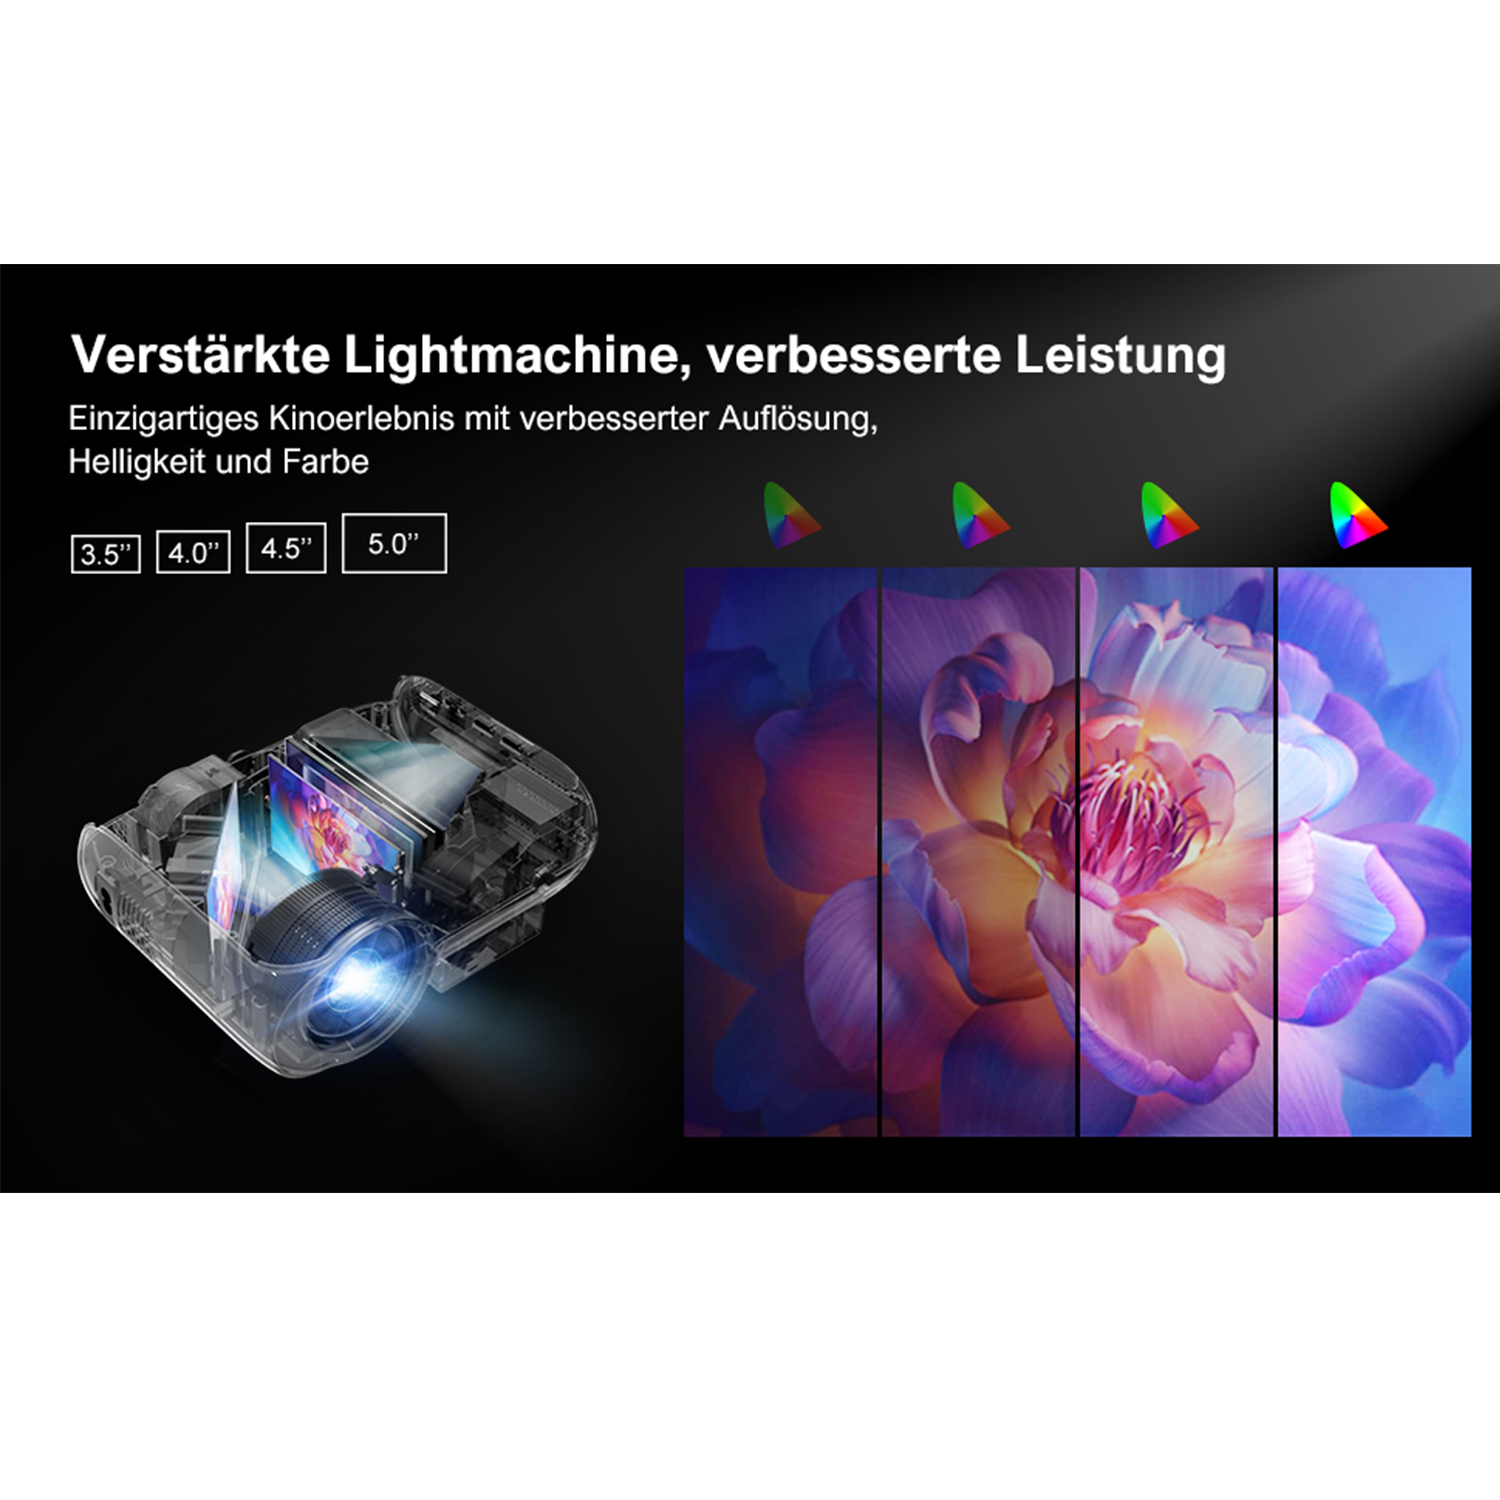 LCD Native 300 Bluetooth HD ANSI-Lumen) Beamer(Full-HD, ULTIMEA Tragbarer 1080P Full